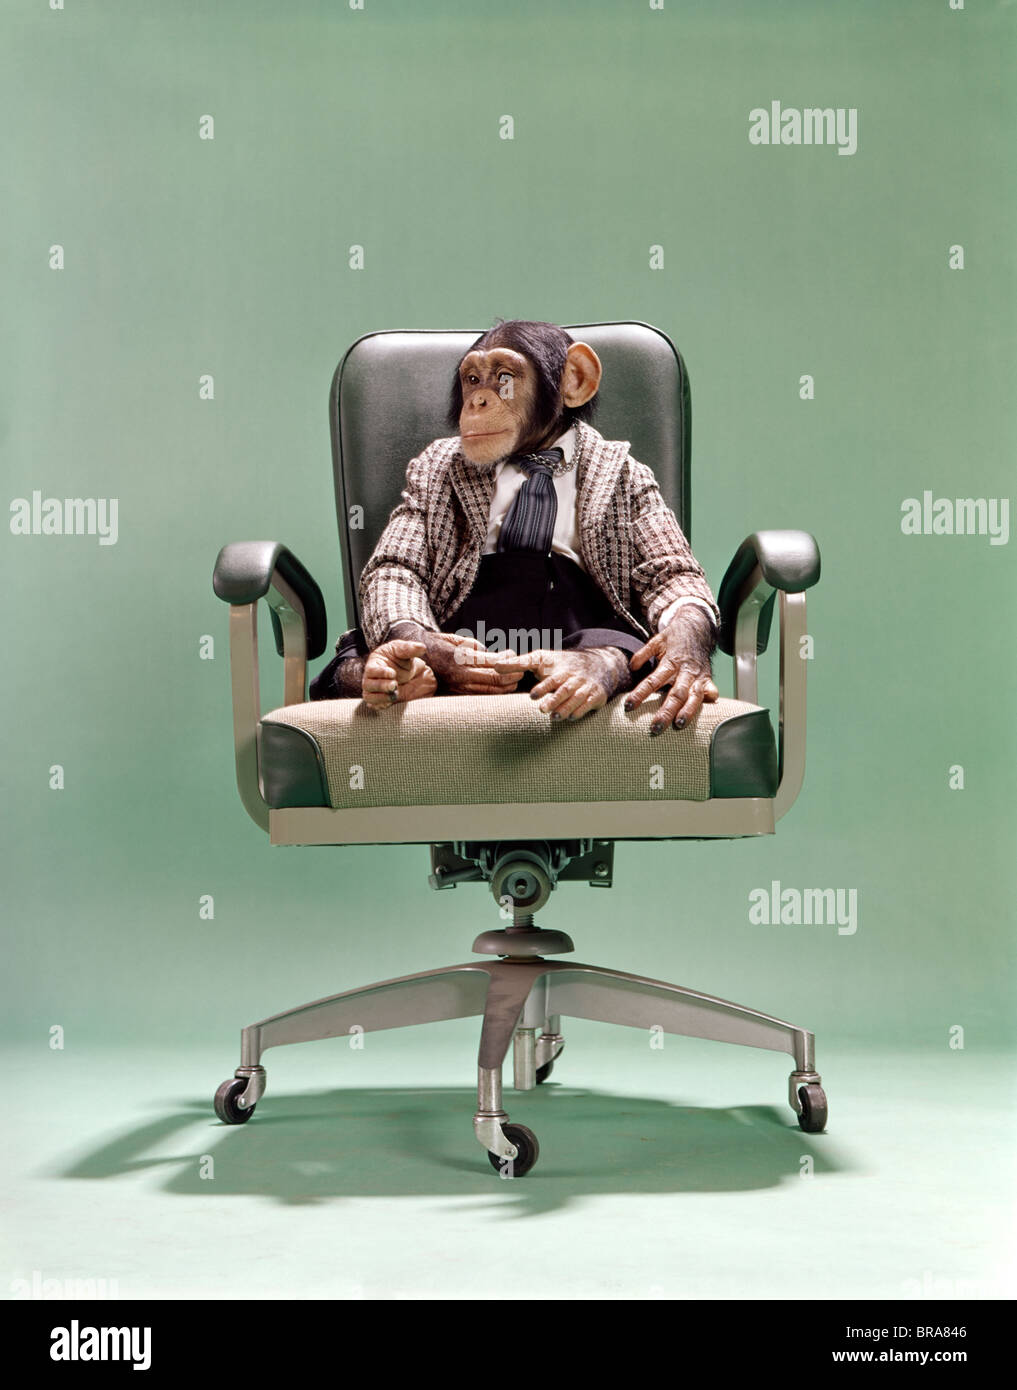 MONKEY SITTING ON CHAIR Stock Photo